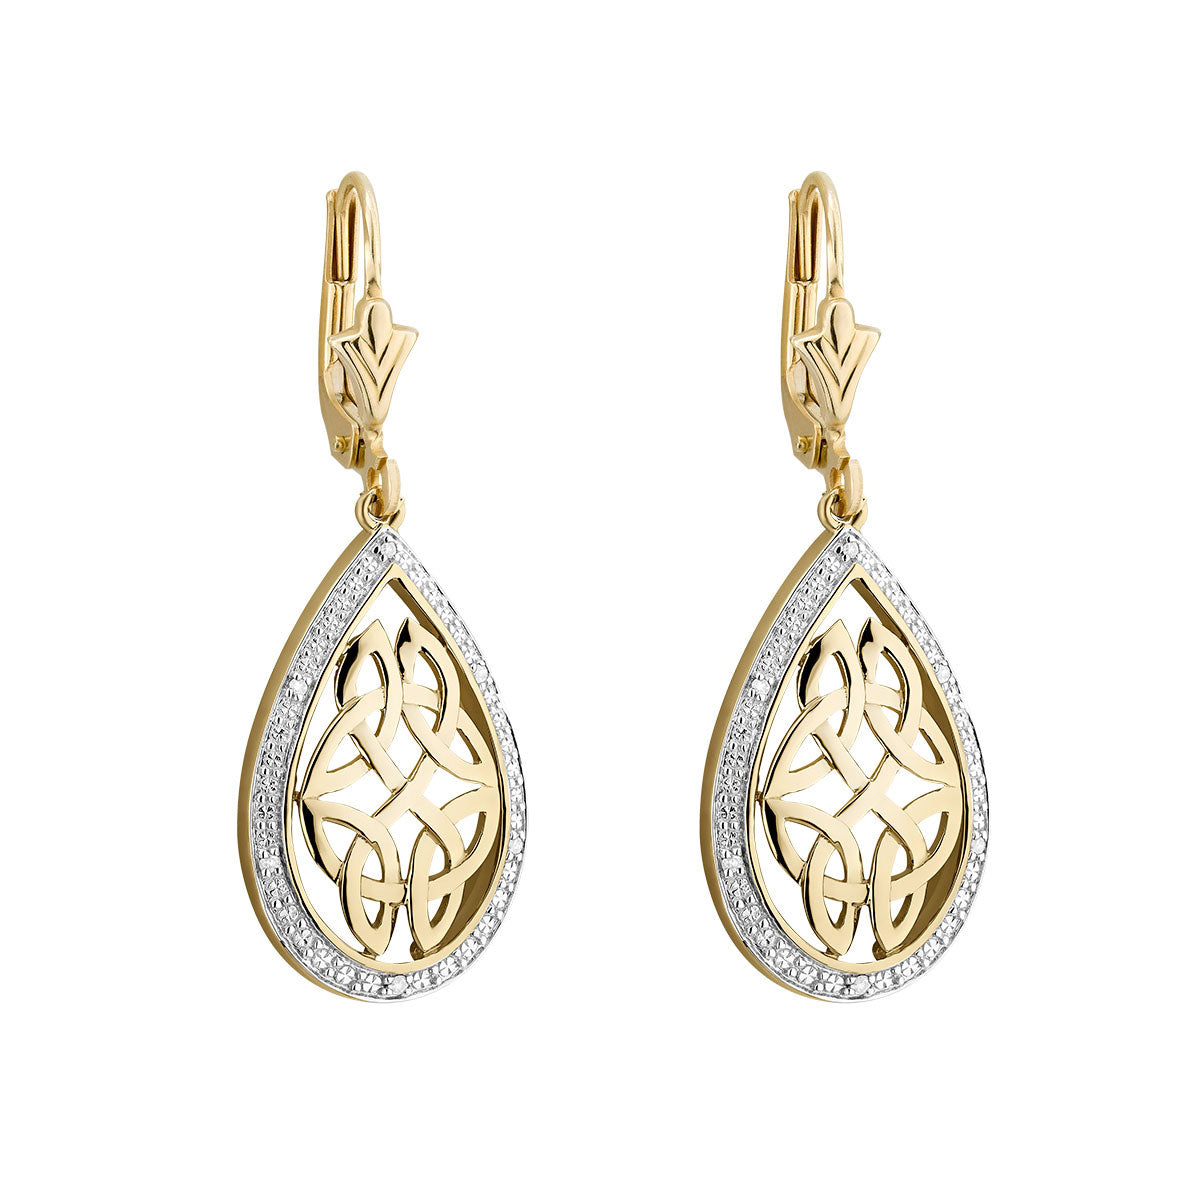 10k gold diamond oval celtic drop earrings s33981 from Solvar